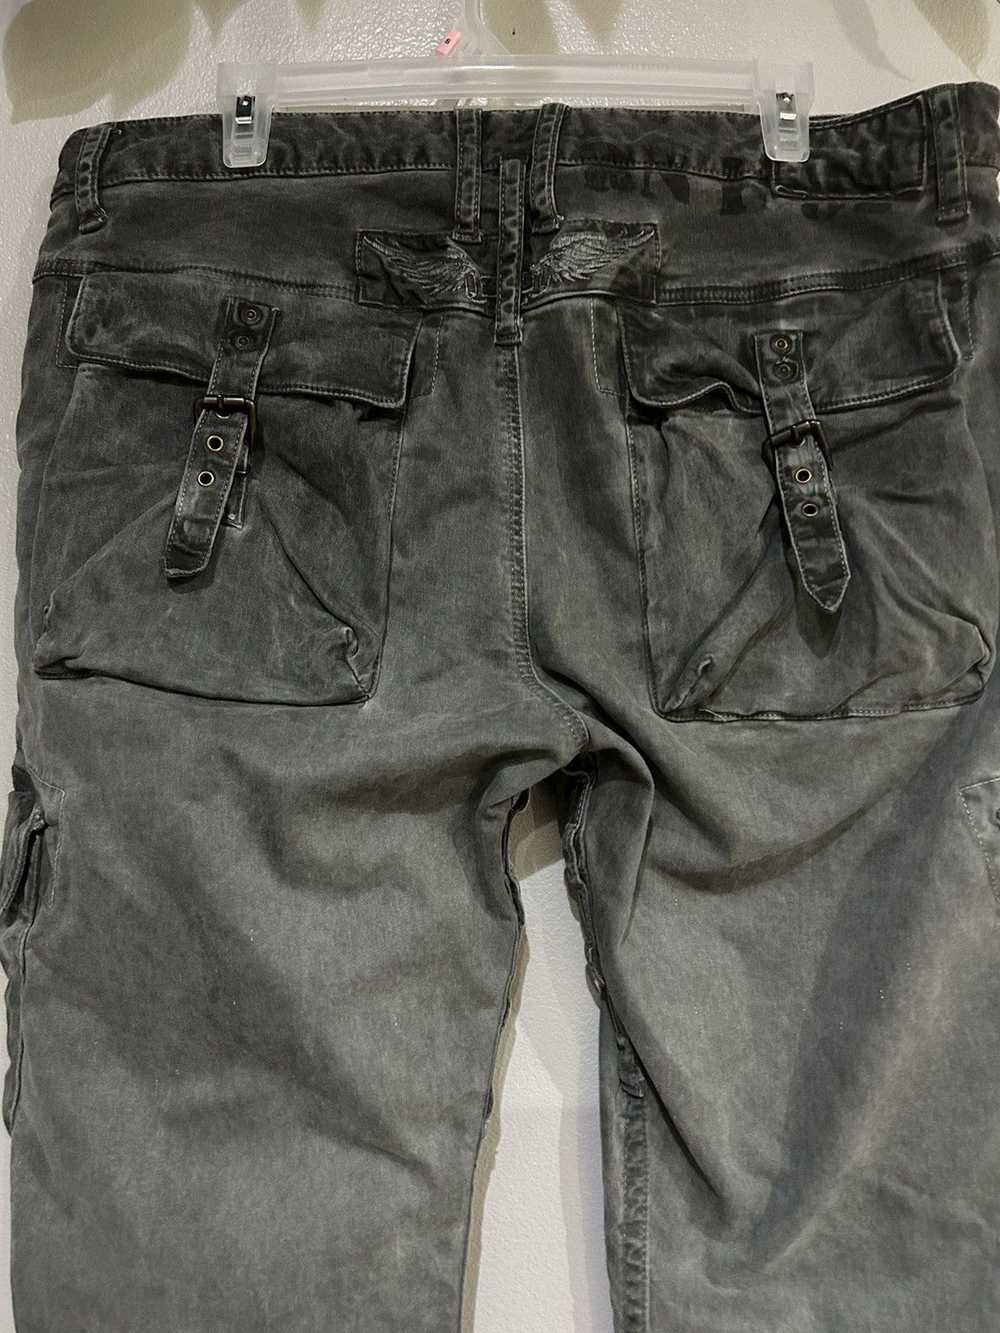 Designer × Robins Jeans Robin predator jeans 36 - image 2